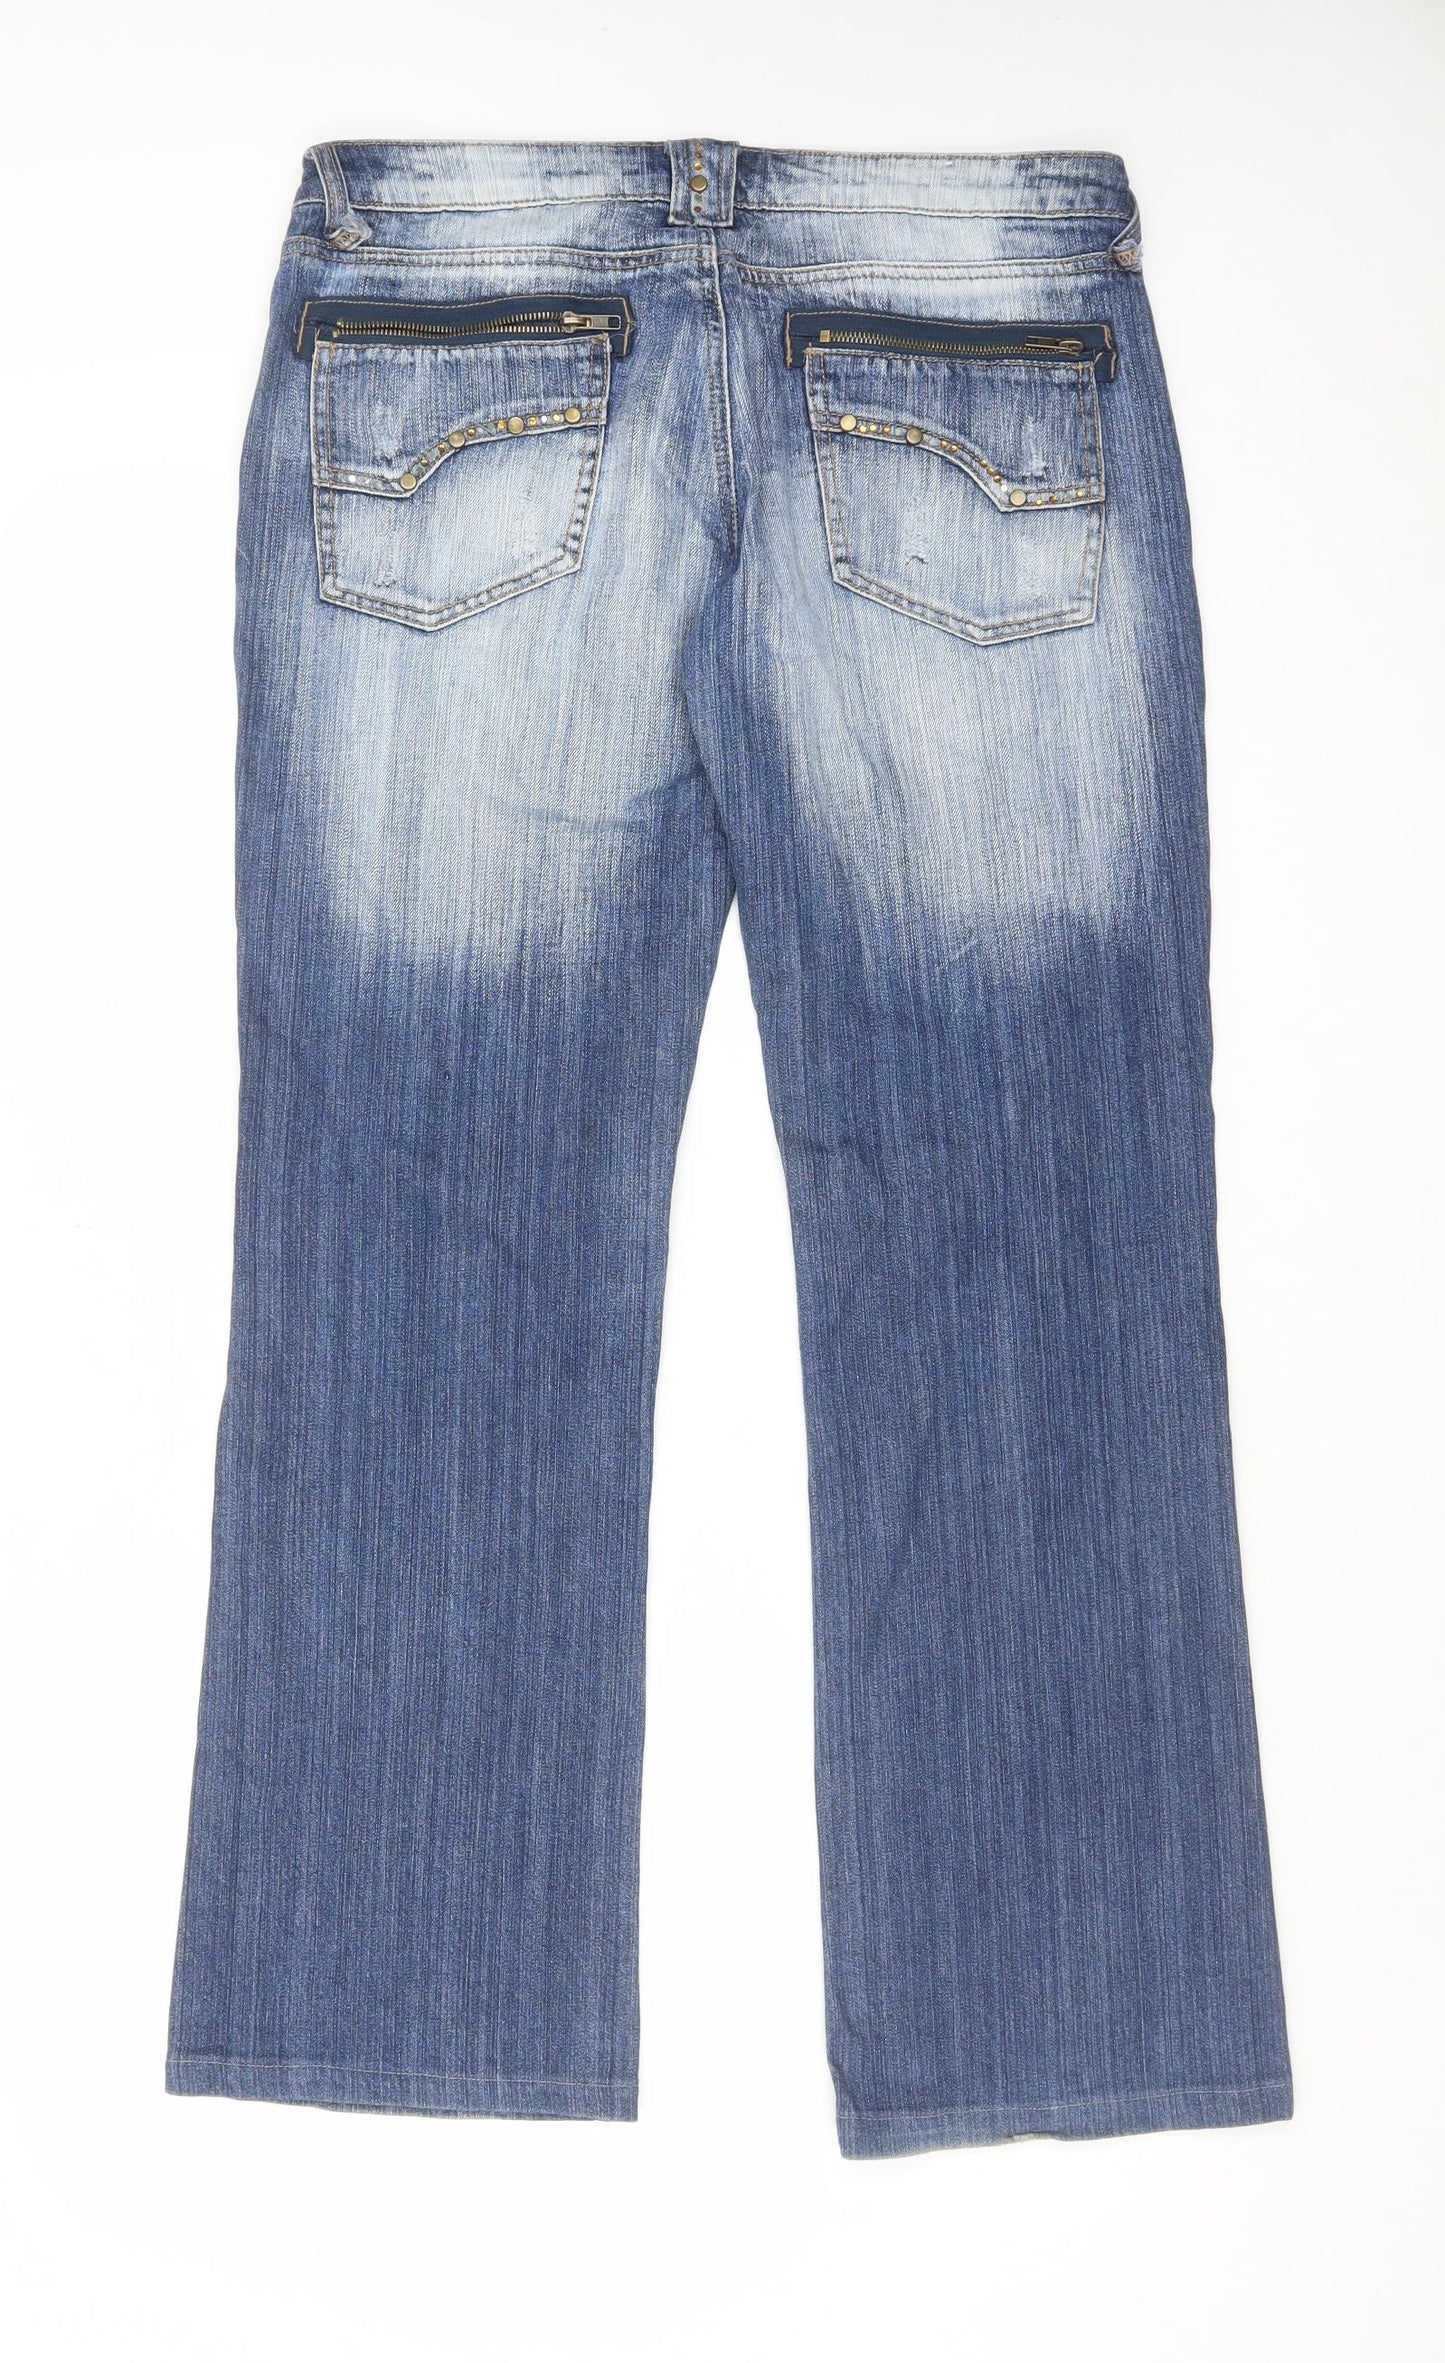 Lucky Bird Womens Blue Cotton Bootcut Jeans Size 34 in L31 in Regular Zip